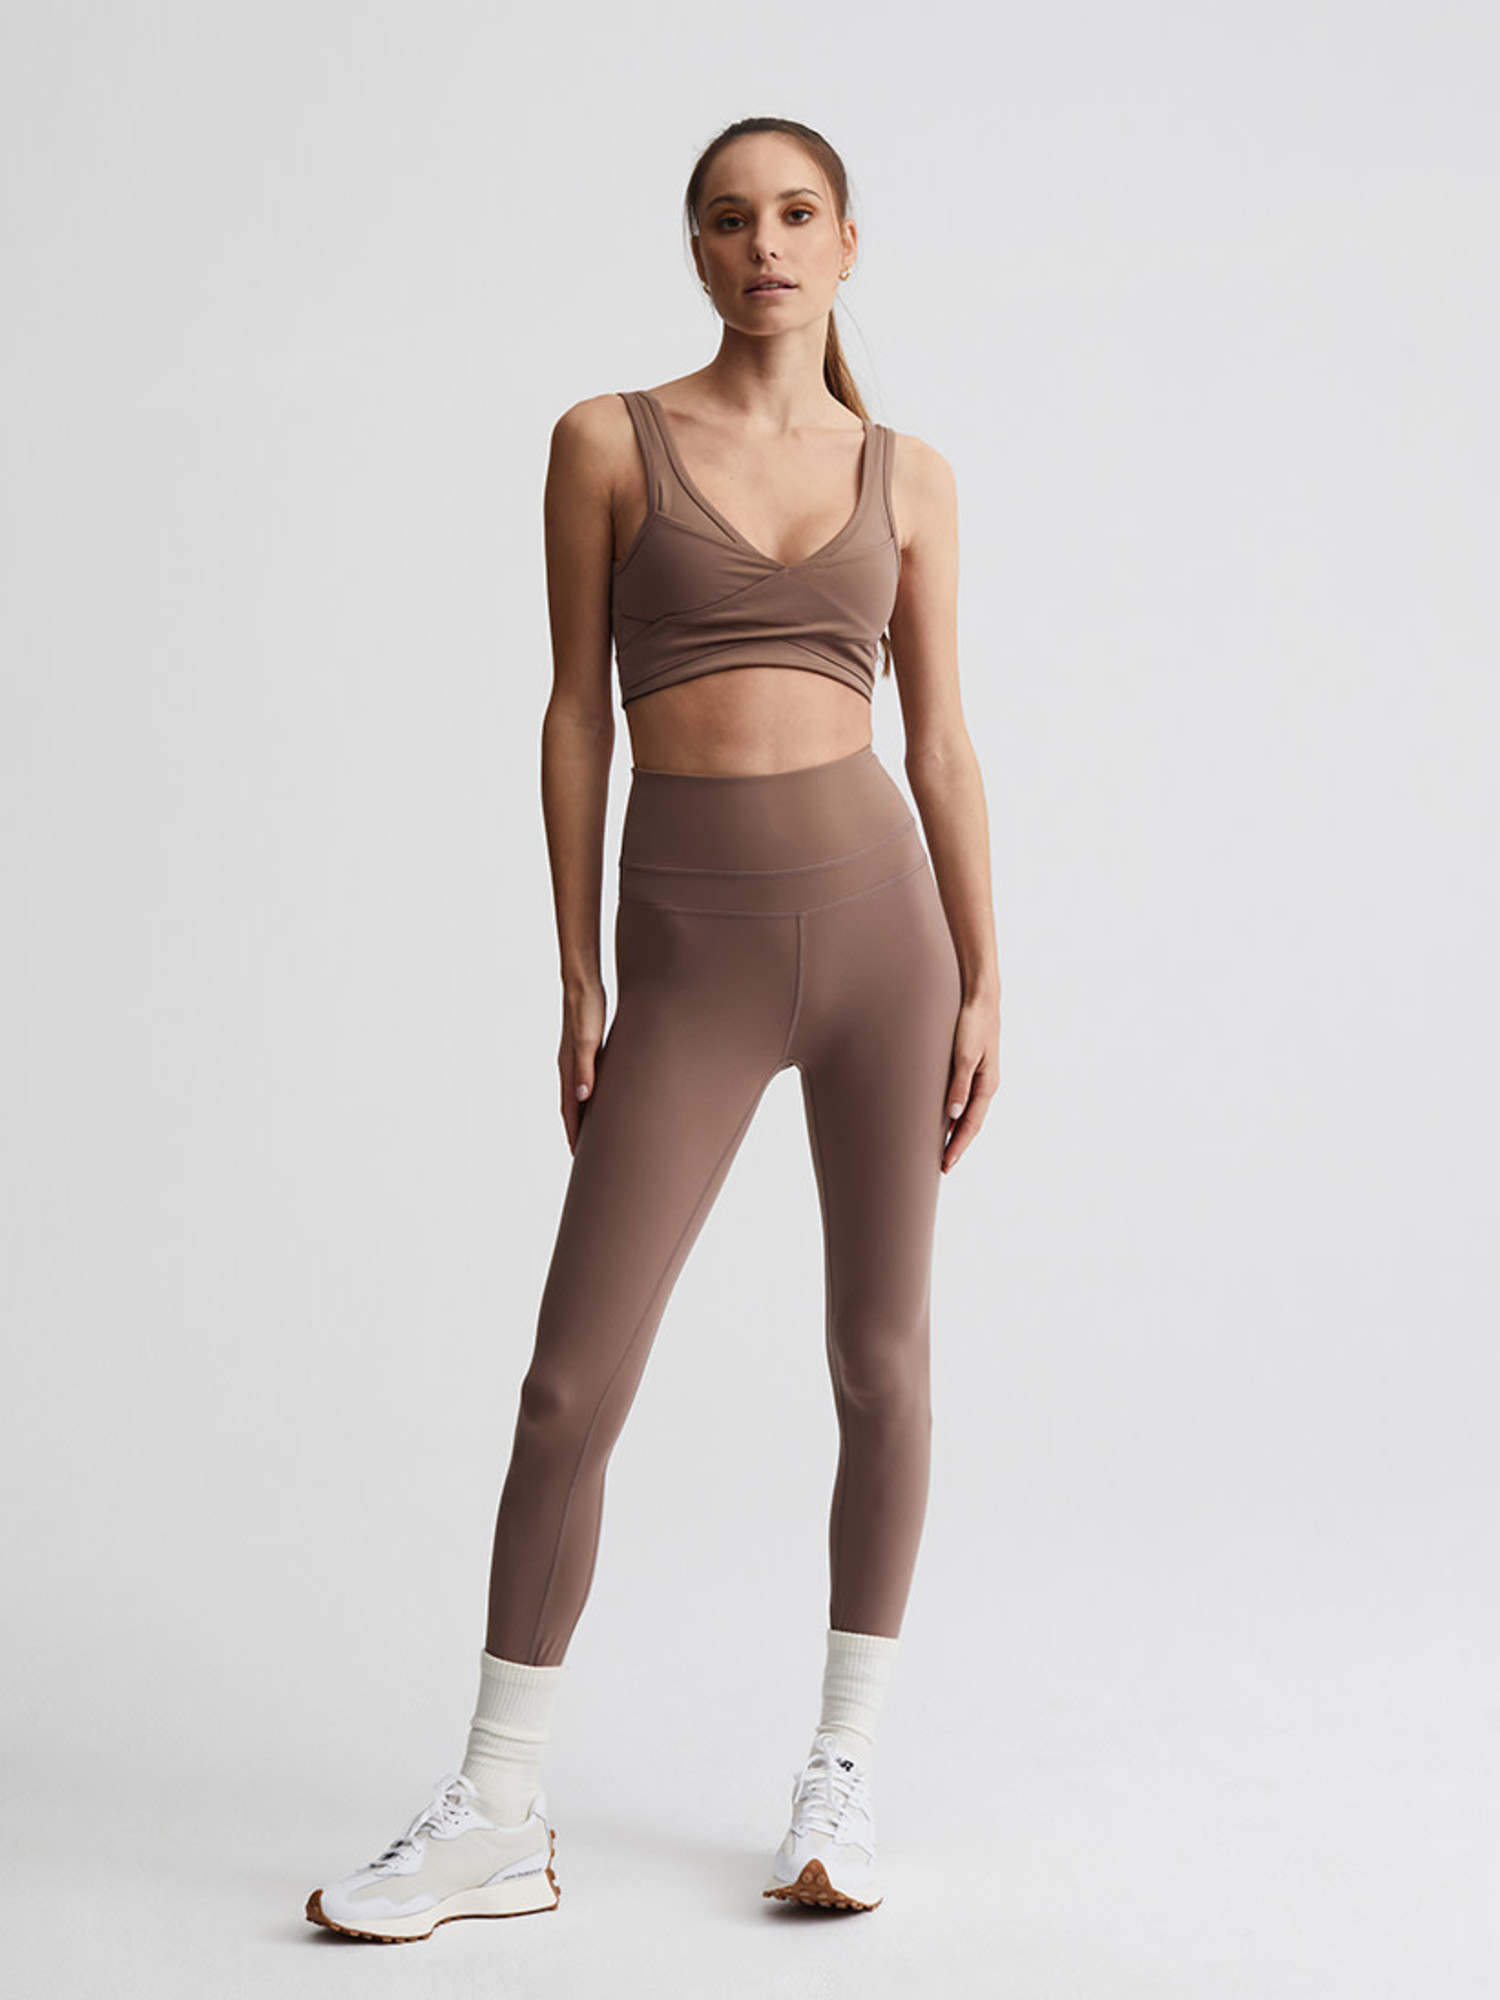 Varley Jill Seamless Yoga Leggings at YogaOutlet.com - Free Shipping –